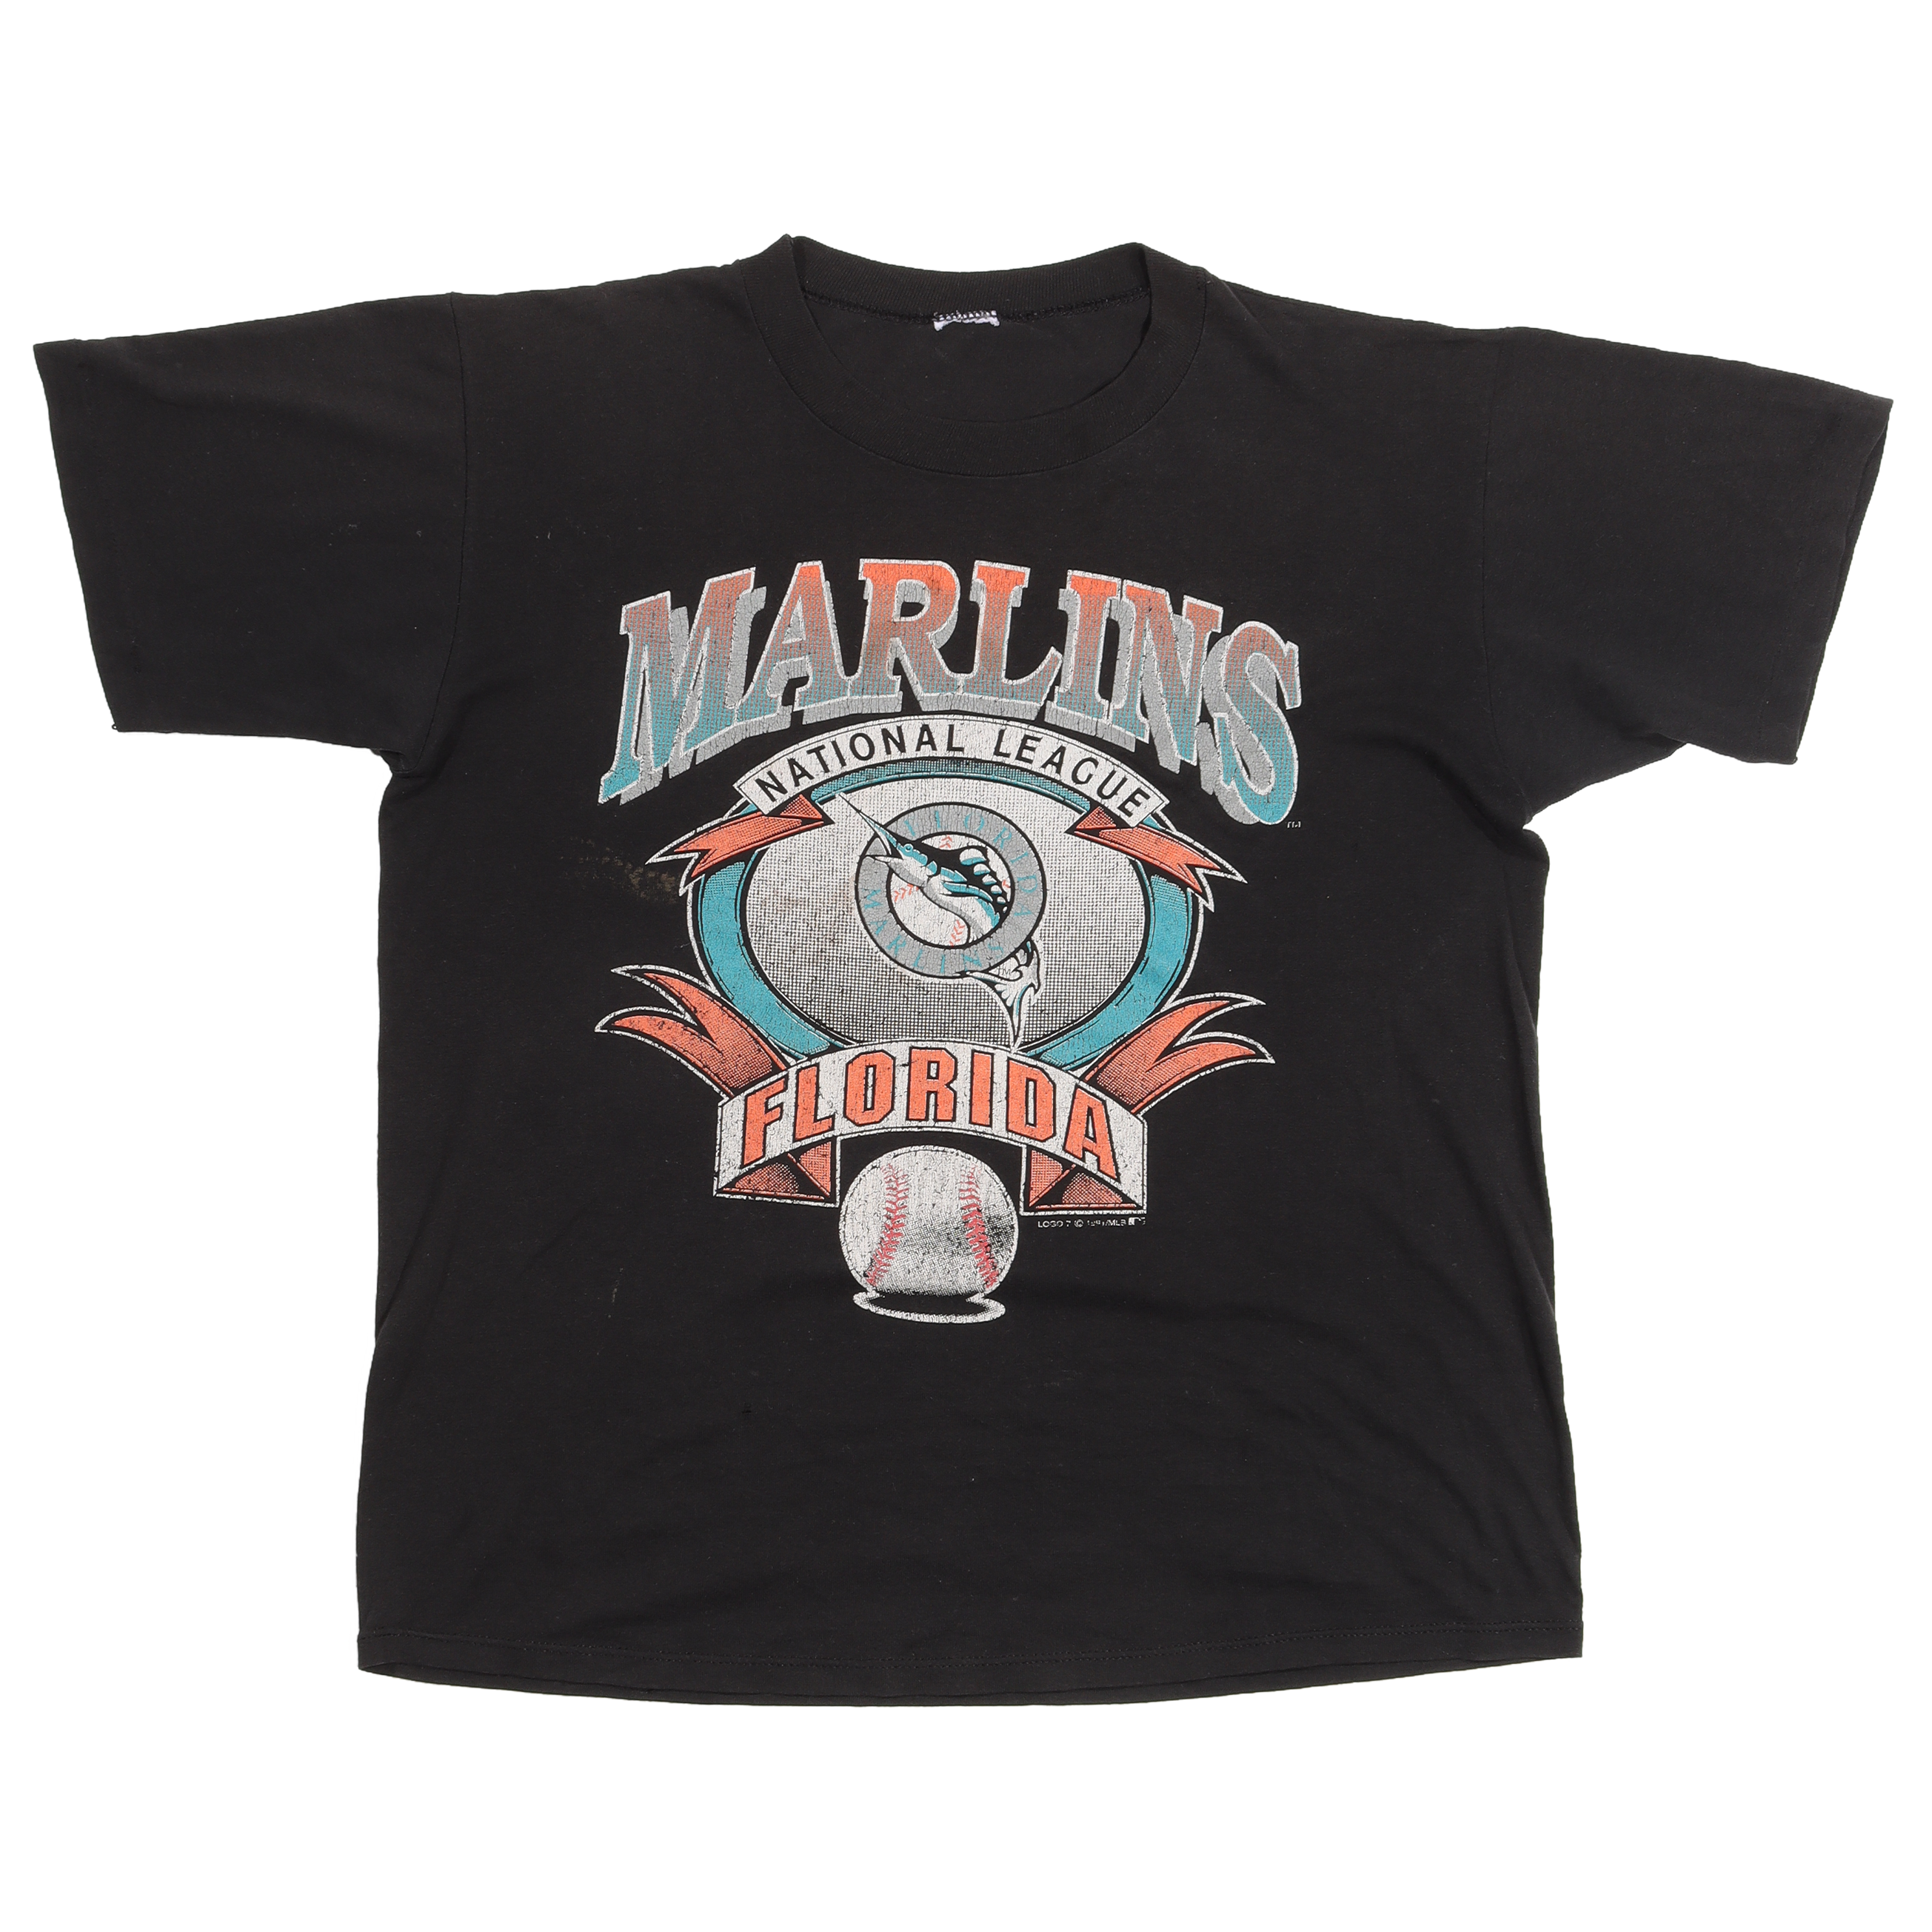 Marlin's T-Shirt